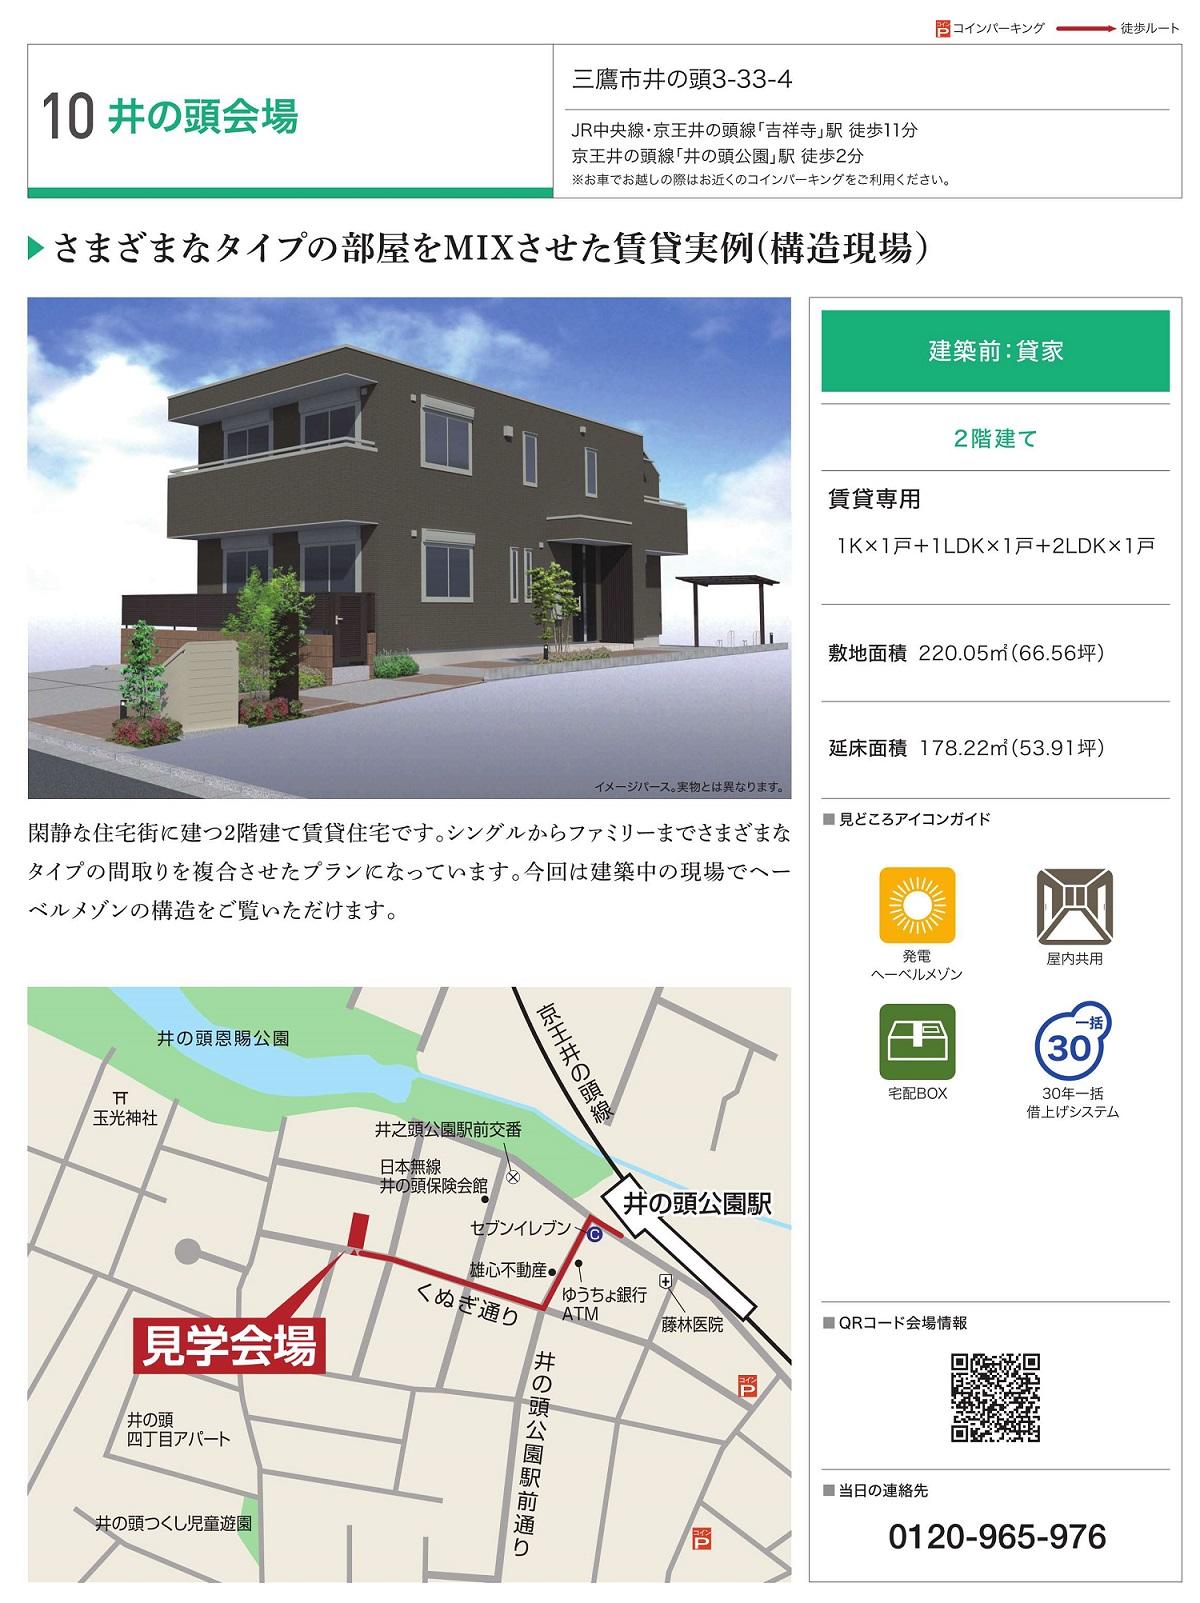 https://www.asahi-kasei.co.jp/maison/hebelplaza/blog/18/kichijoji/item/2019/190418-2.jpg